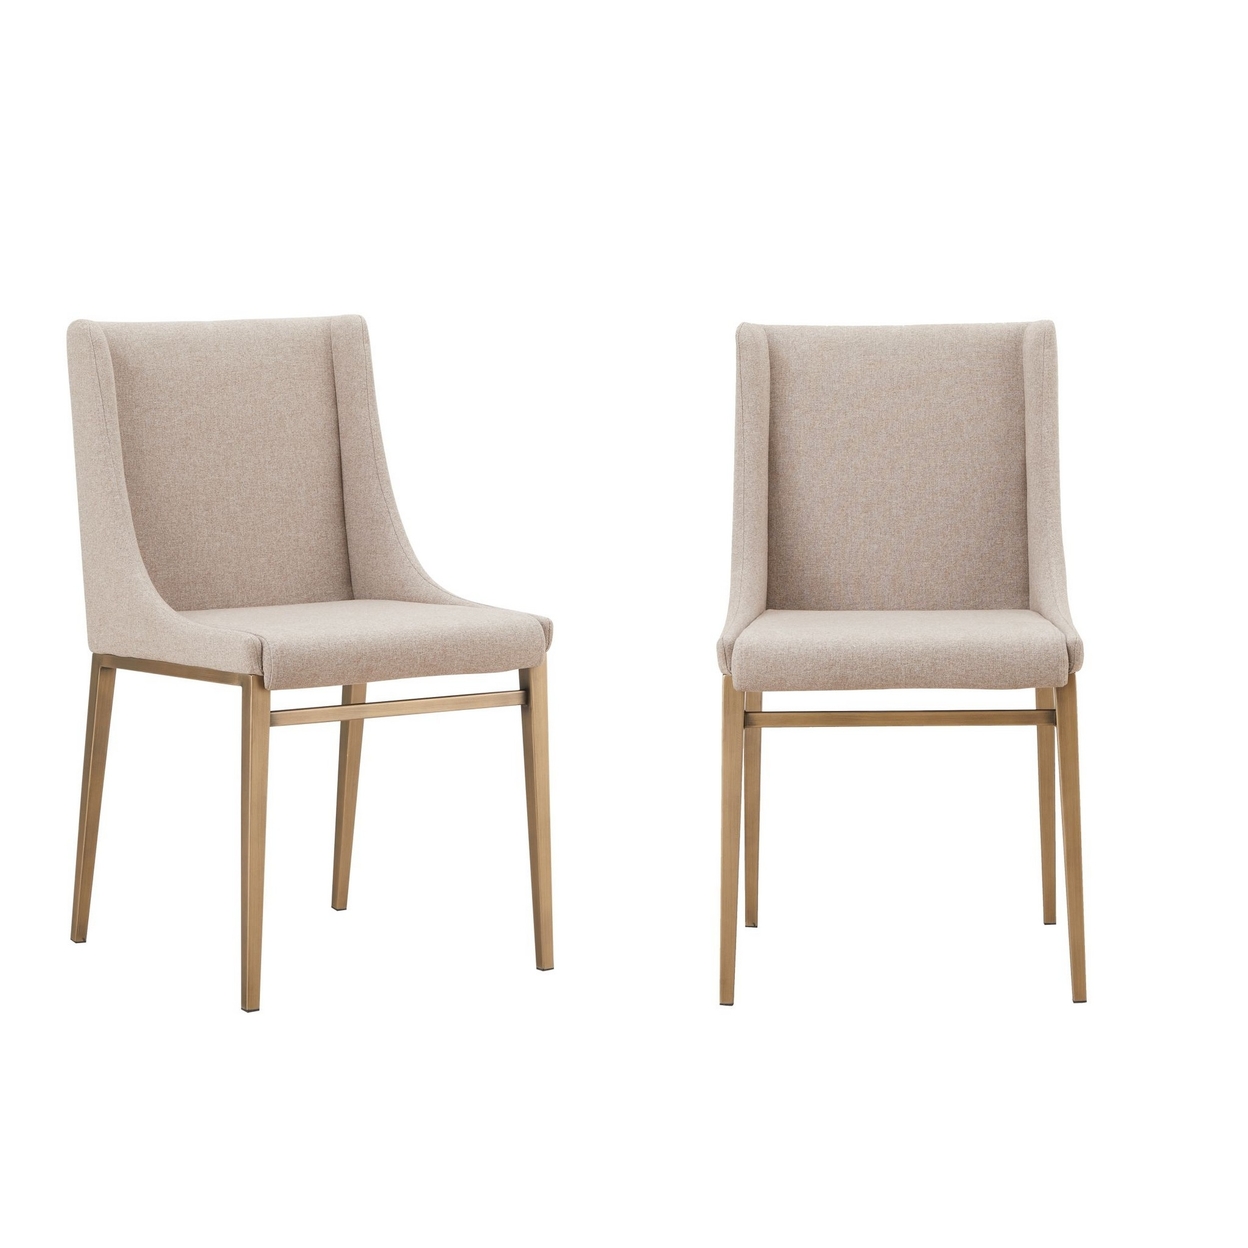 Cid Kenn 19 Inch Dining Chair, Set Of 2, Beige Fabric, Brass Finished Legs- Saltoro Sherpi